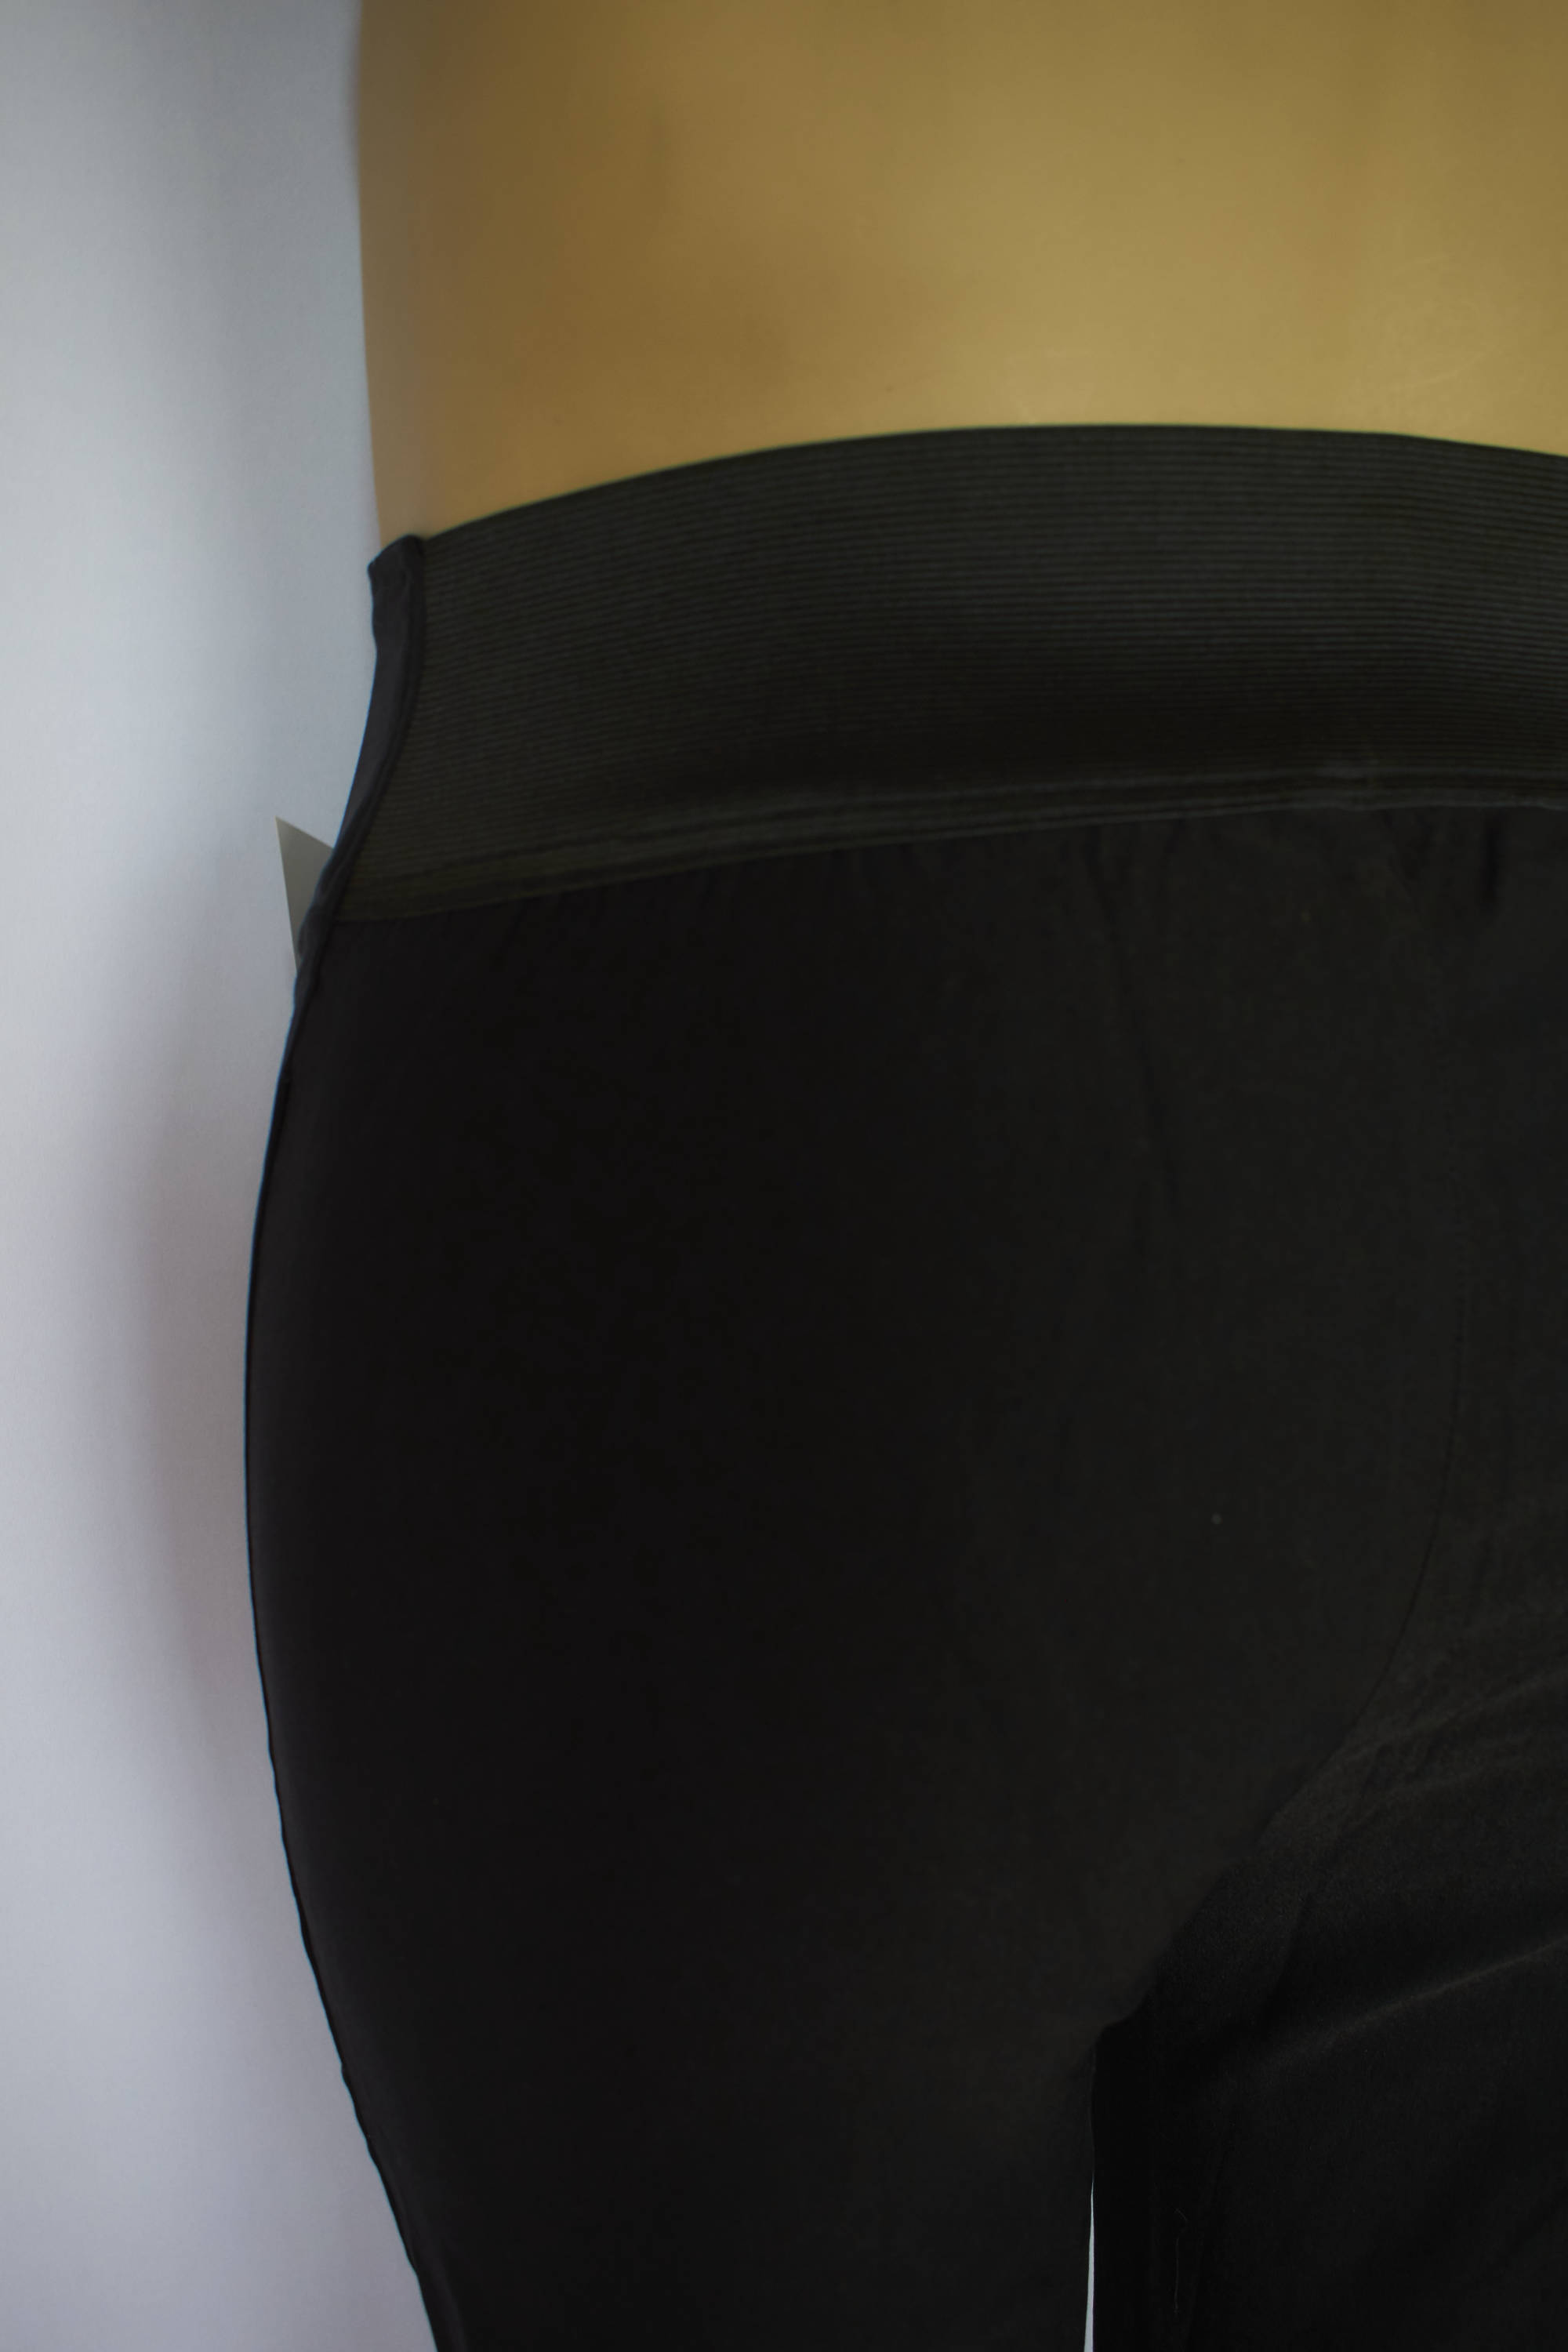 Pantalon tipo leggins color negro Tallas 16 a la 22 de JoPlus Tallas Grandes